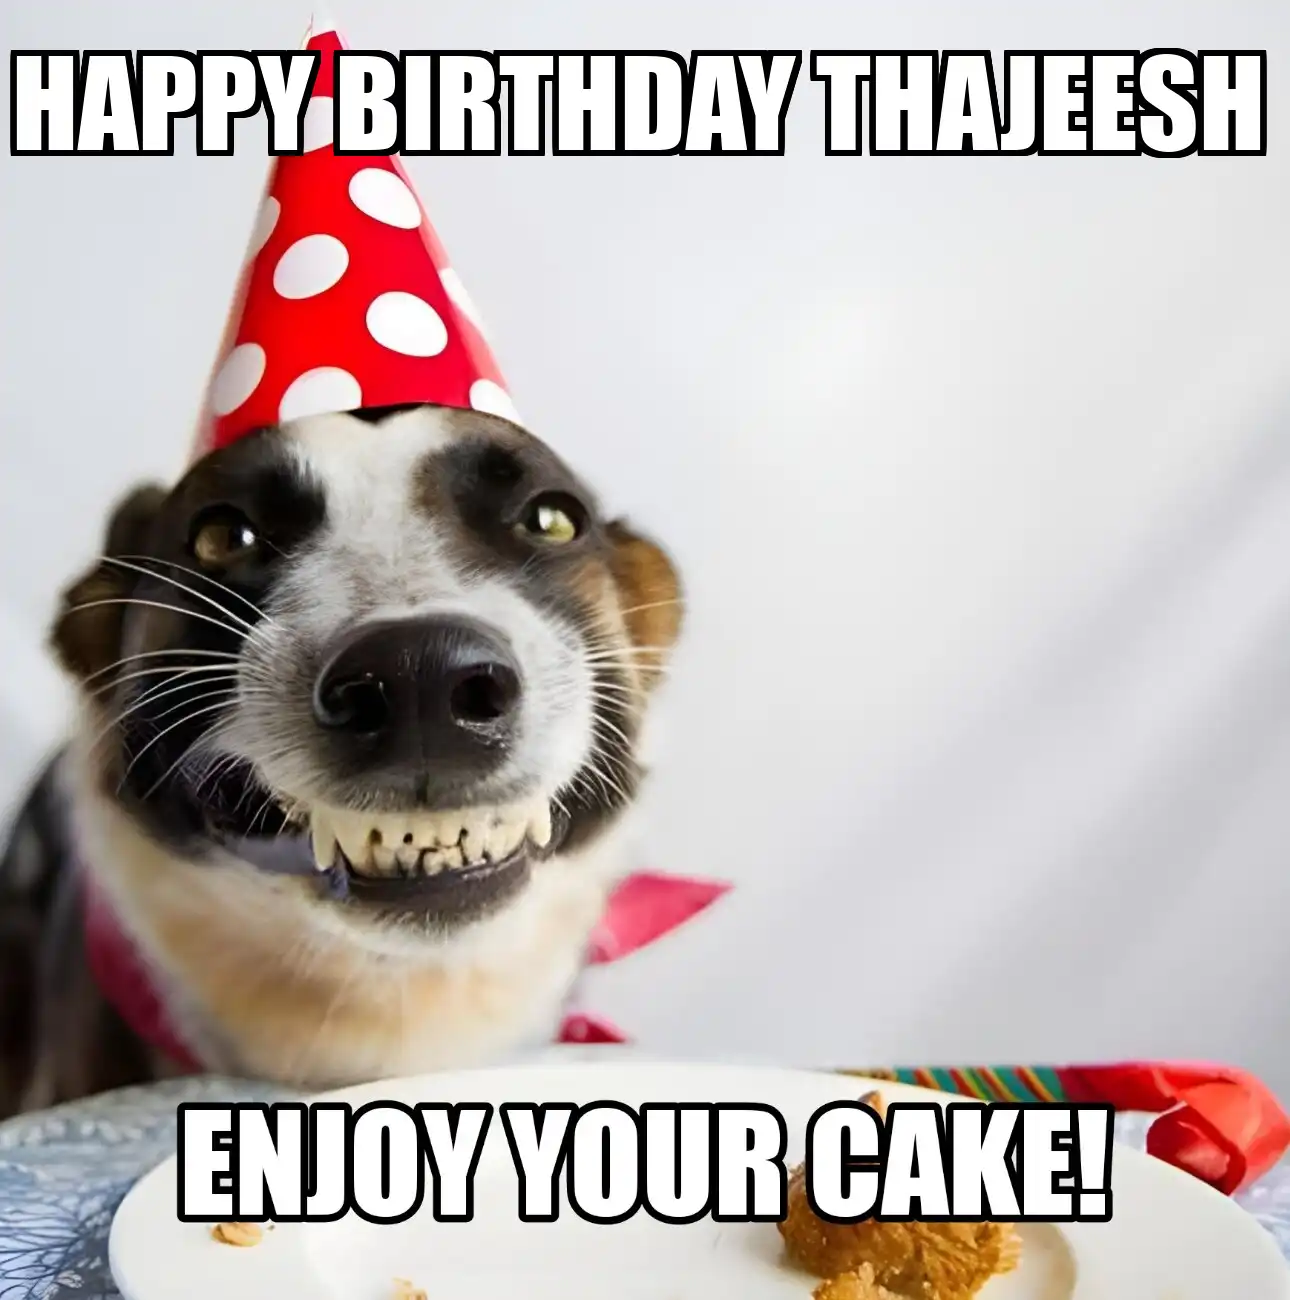 Happy Birthday Thajeesh Enjoy Your Cake Dog Meme